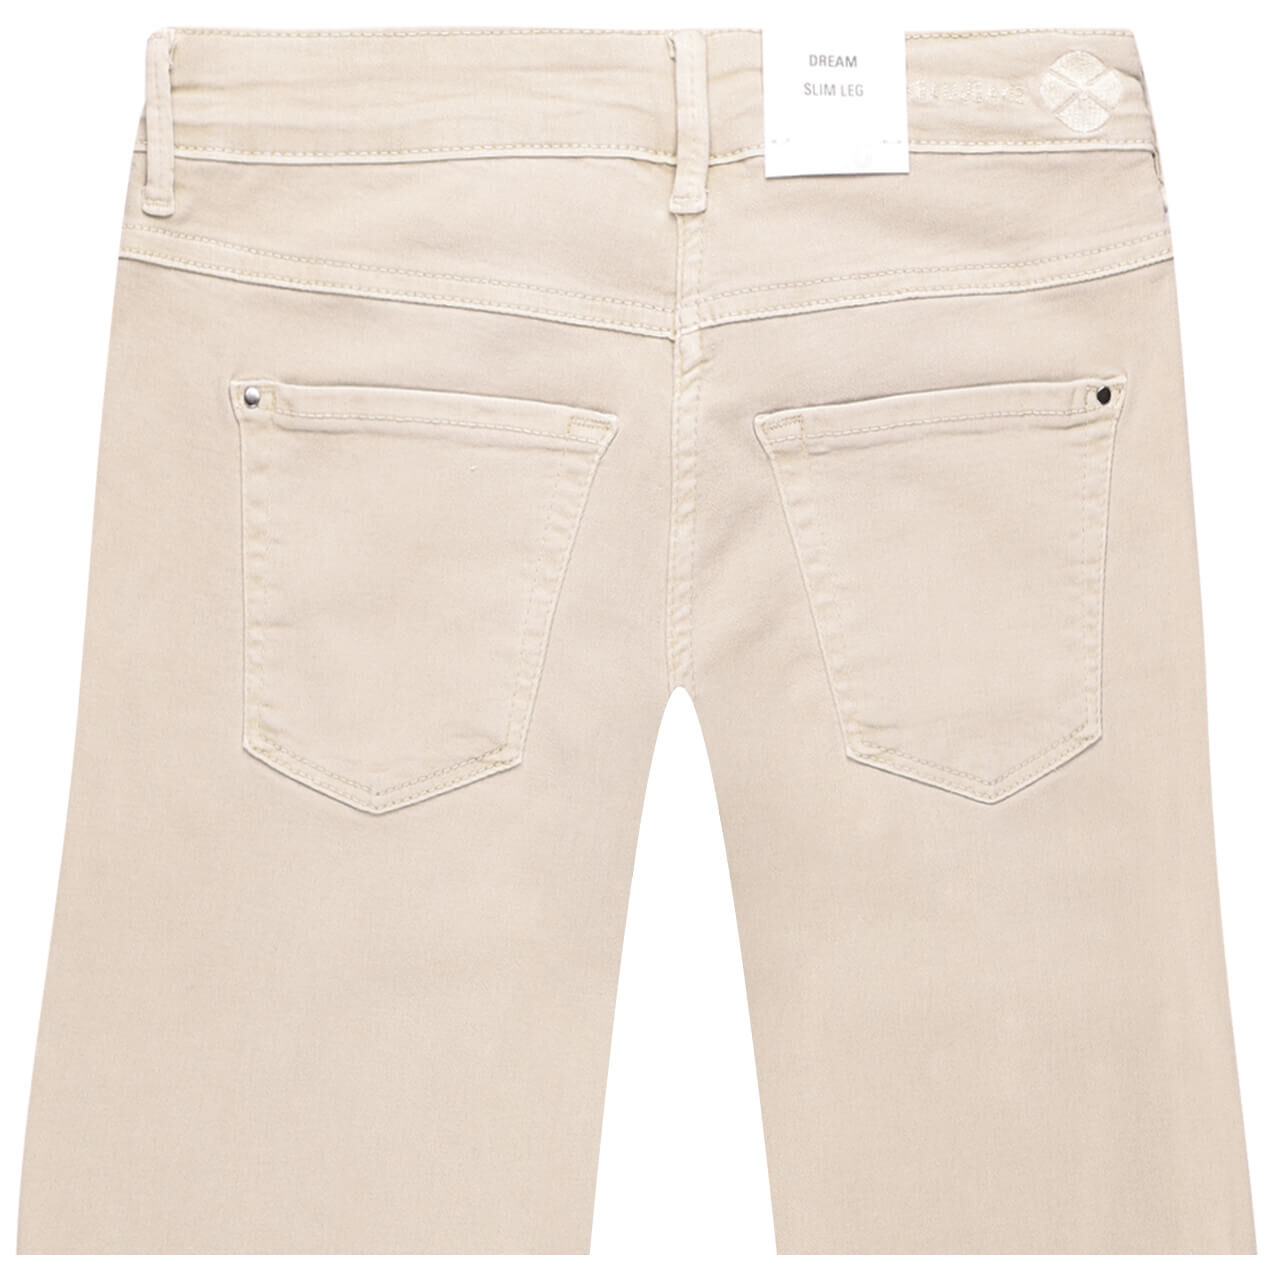 MAC Dream Chic 7/8 Jeans light beige